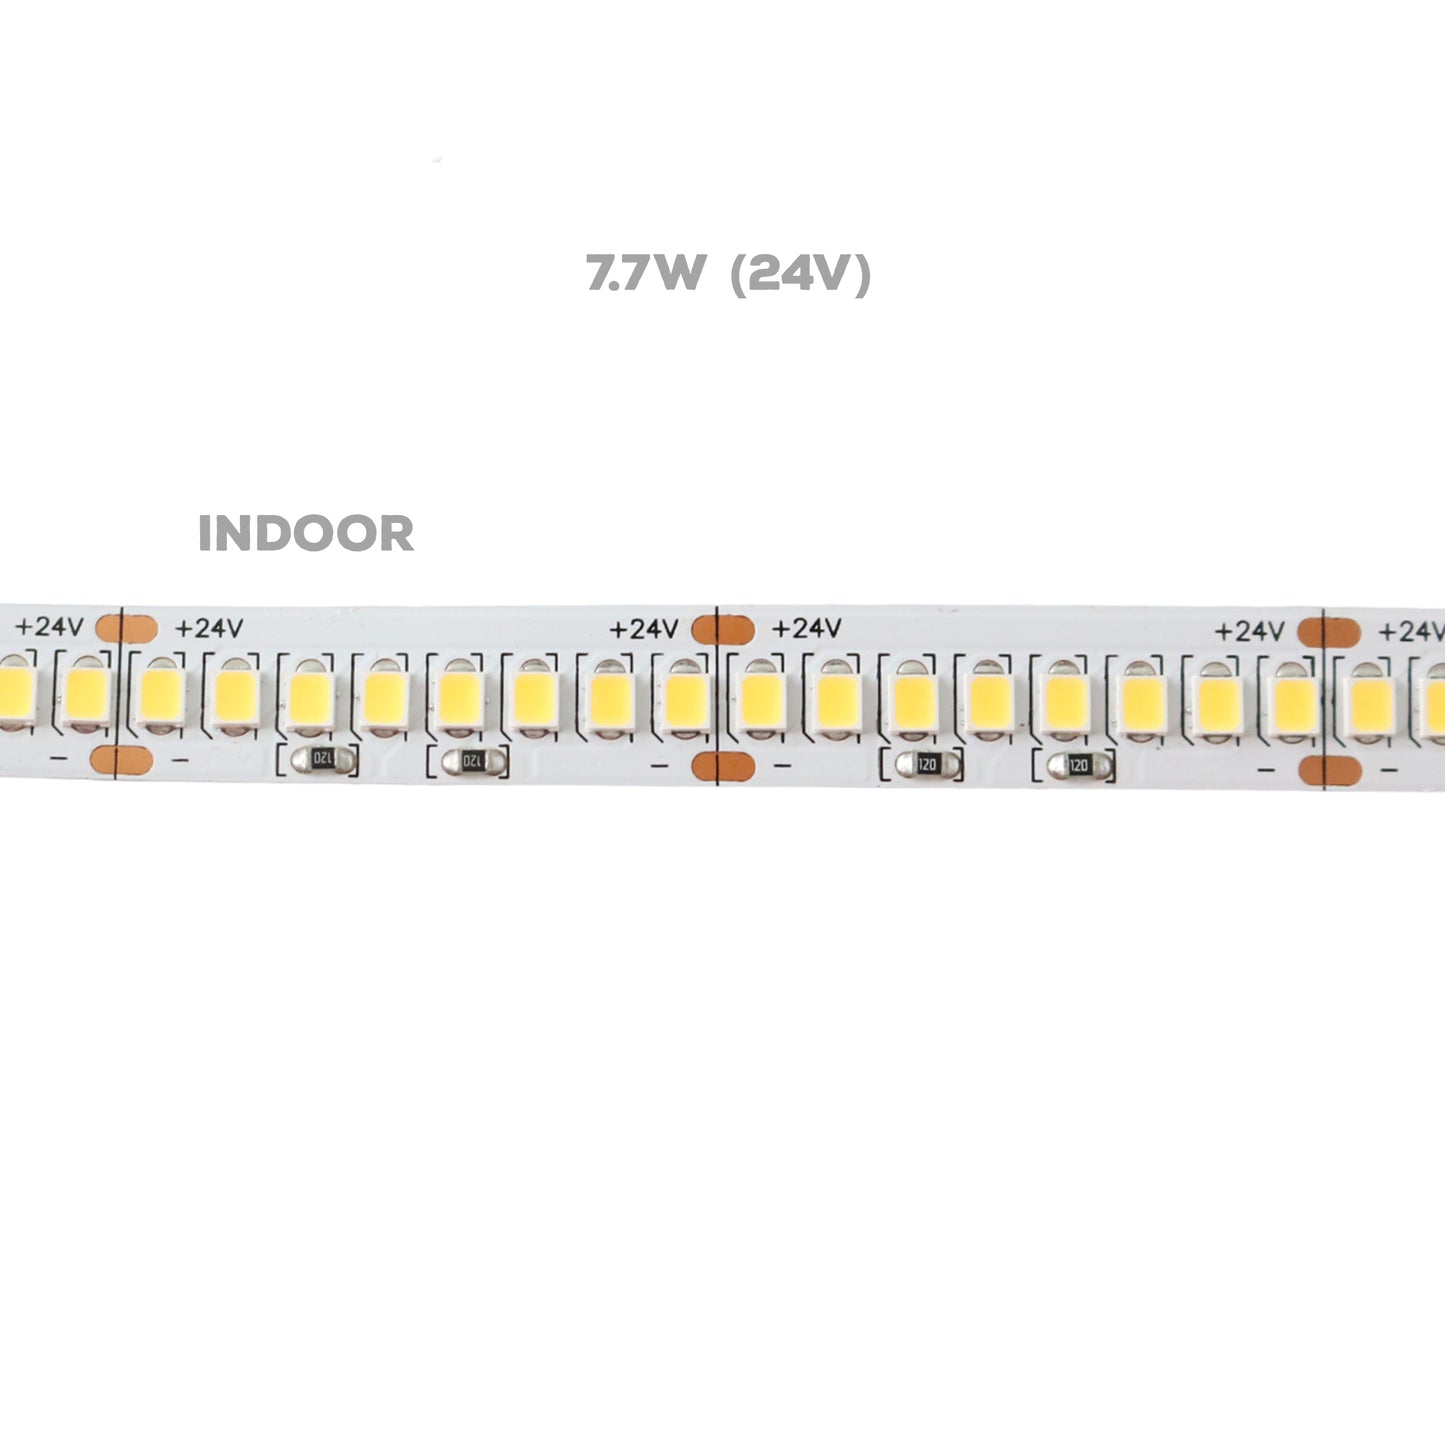 Dimmable Single Color LED Strip Lights 24V, 7.7W - Indoor Only